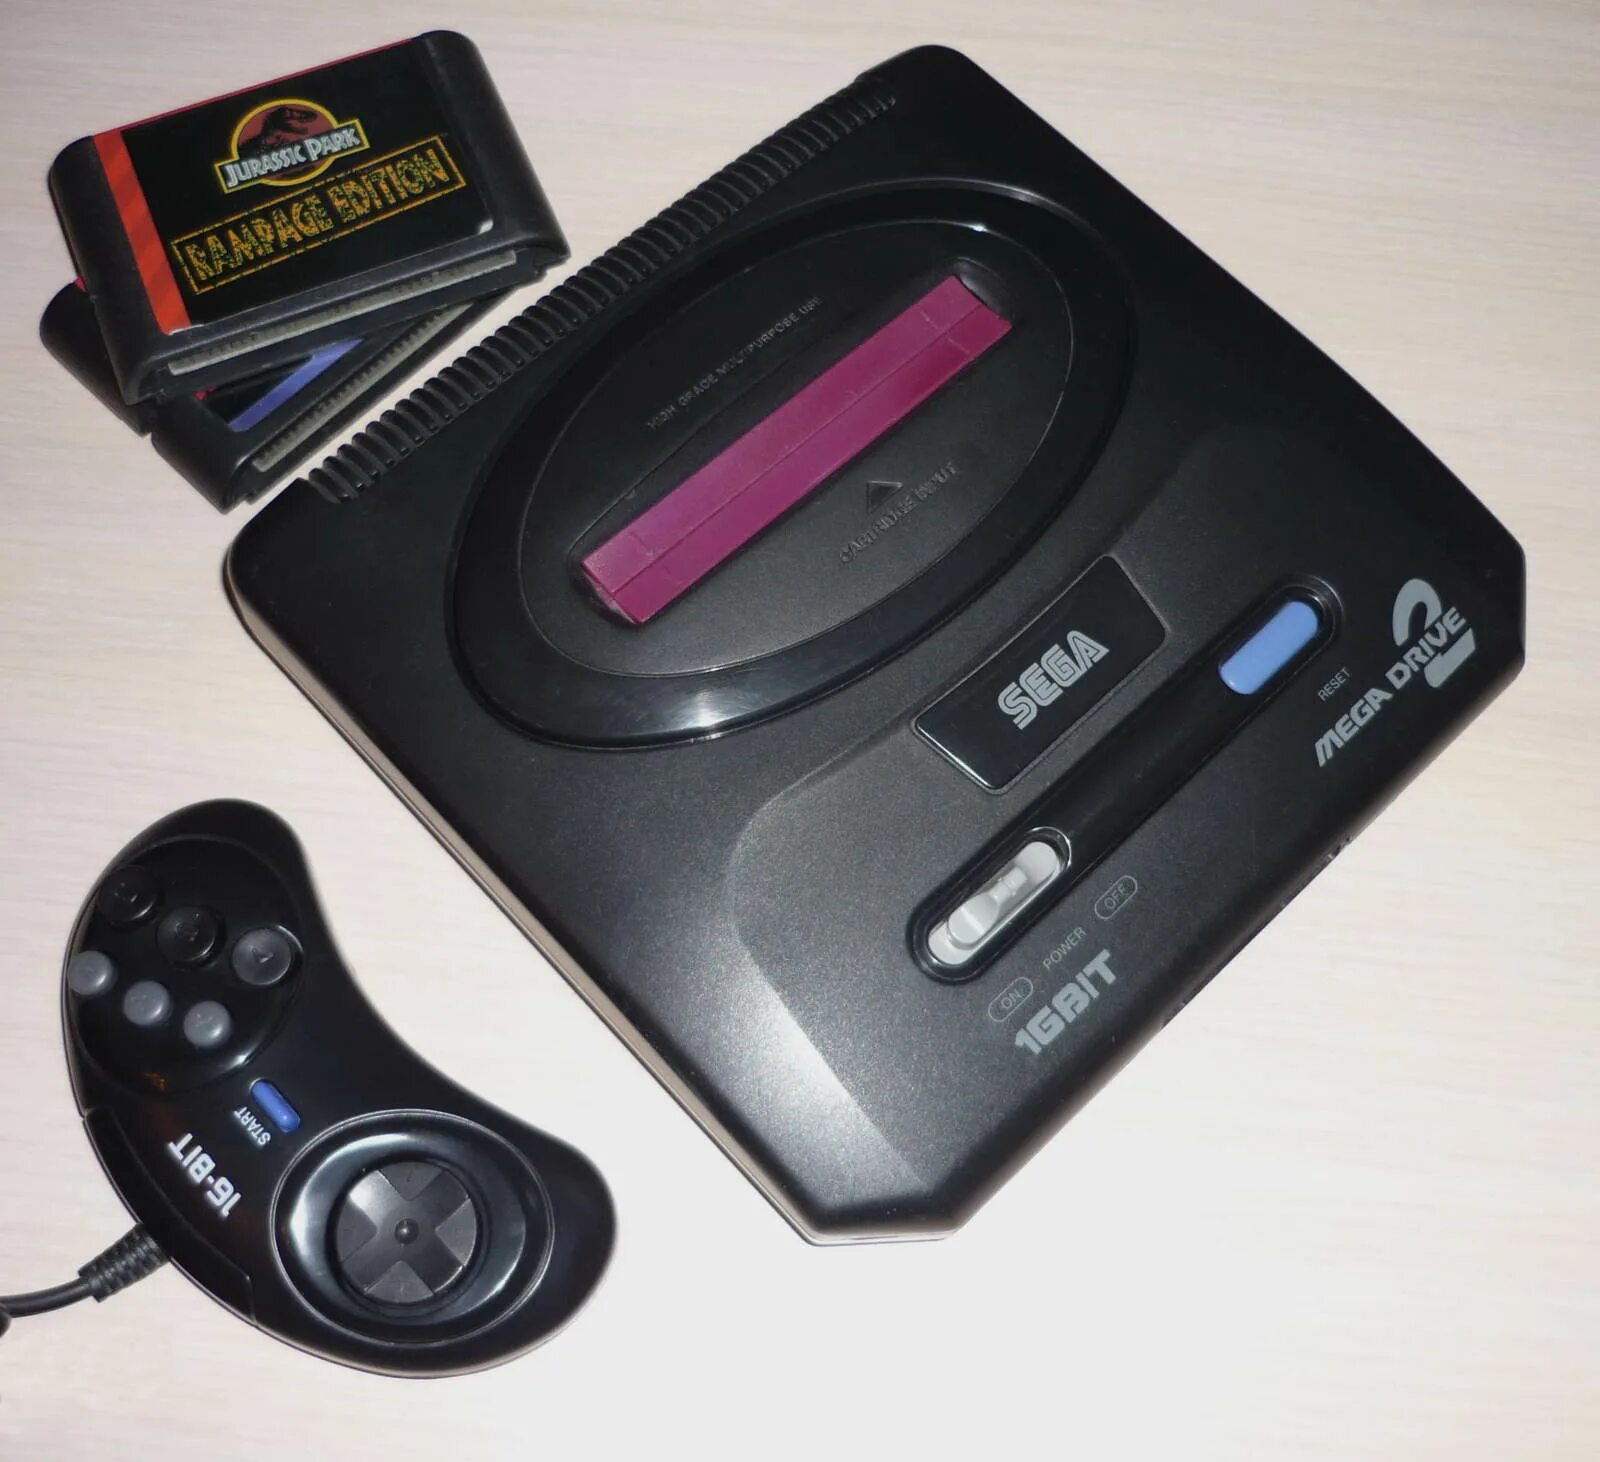 Игровая приставка Sega Mega Drive 2. Сега мега драйв игровая приставка 90-х. Sega Mega Drive 16 бит. Сега мегадрайв 2 16 бит приставка.